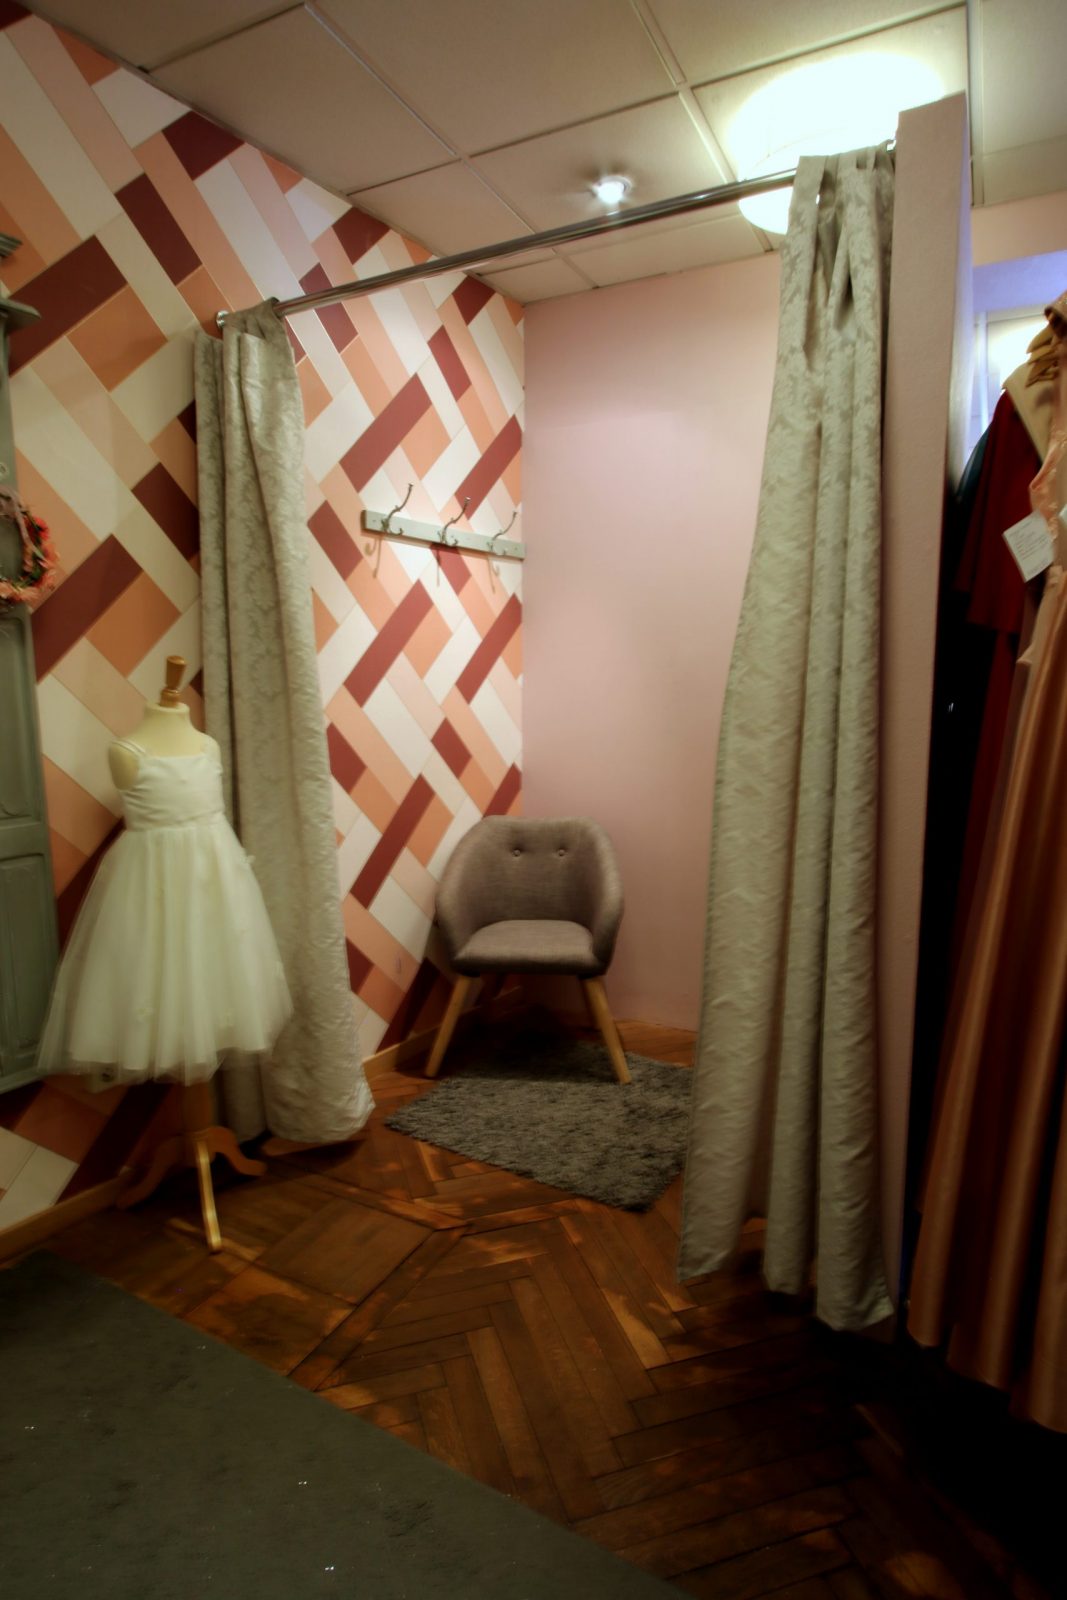 Robe de Coeur - Robe de soirée - robe de cérémonie- robe de demoiselle d’honneur - Albi - Tarn - Robe de mariée- accessoire - boutique cosy- cocooning- magasin robe de mariee